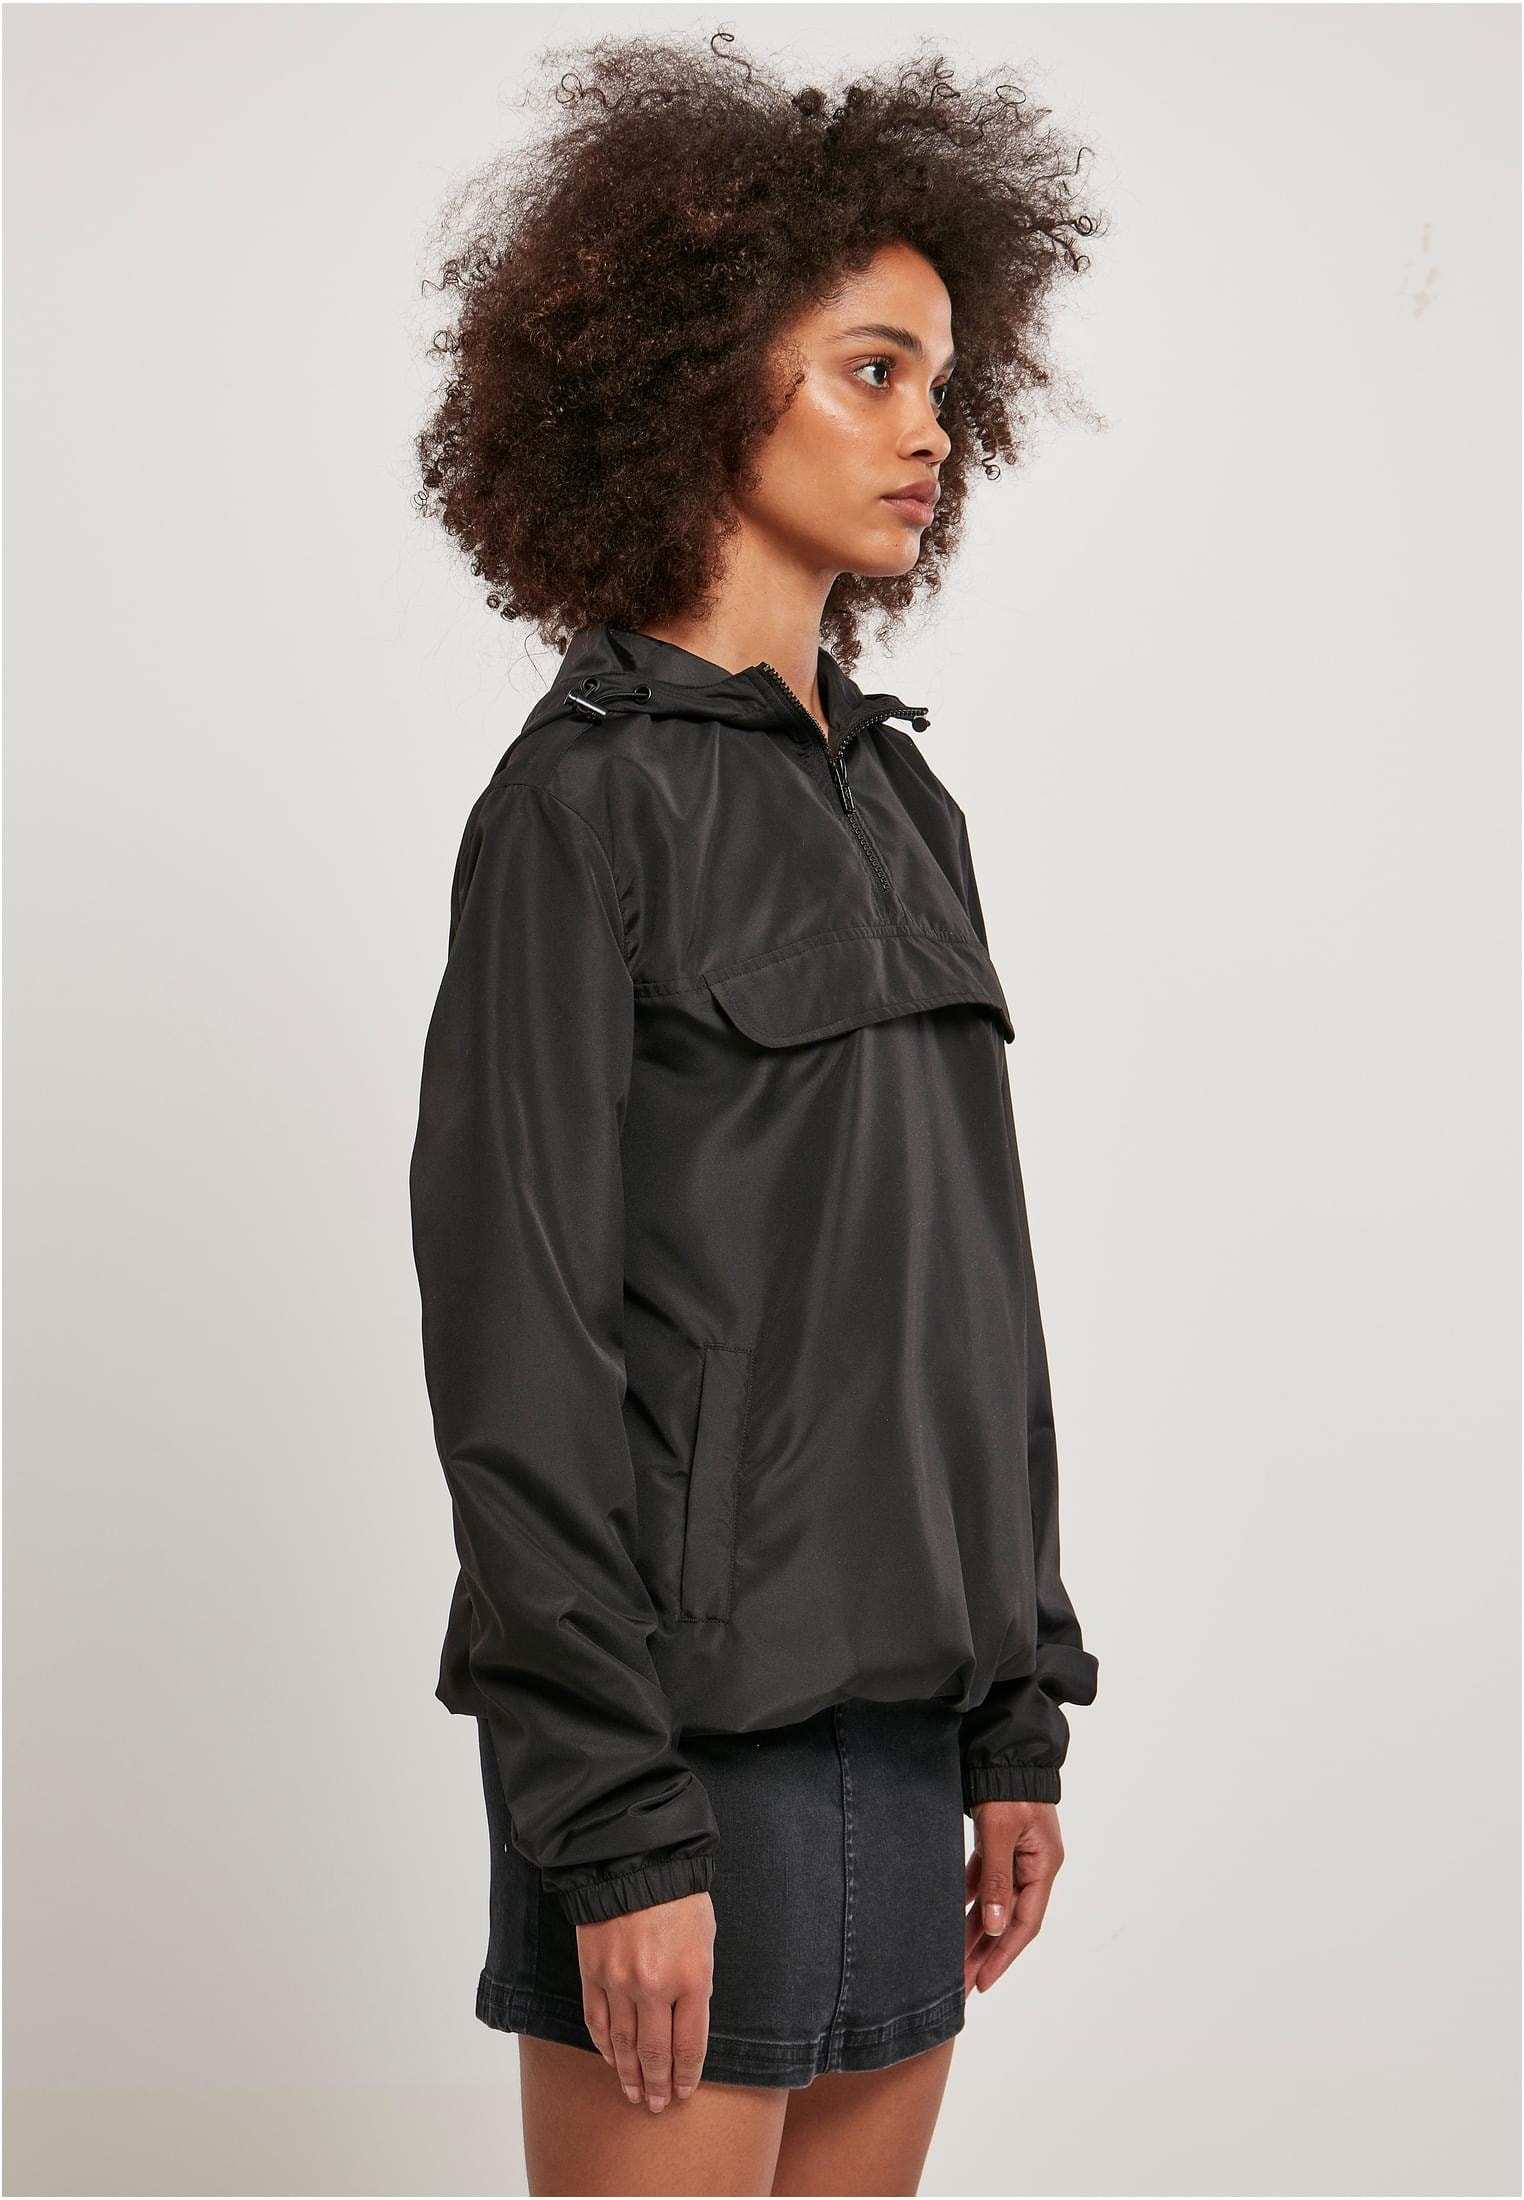 Basic (1 »Damen ohne Outdoorjacke für Jacket«, BAUR | Recycled Over kaufen St.), Pull URBAN Ladies Kapuze CLASSICS